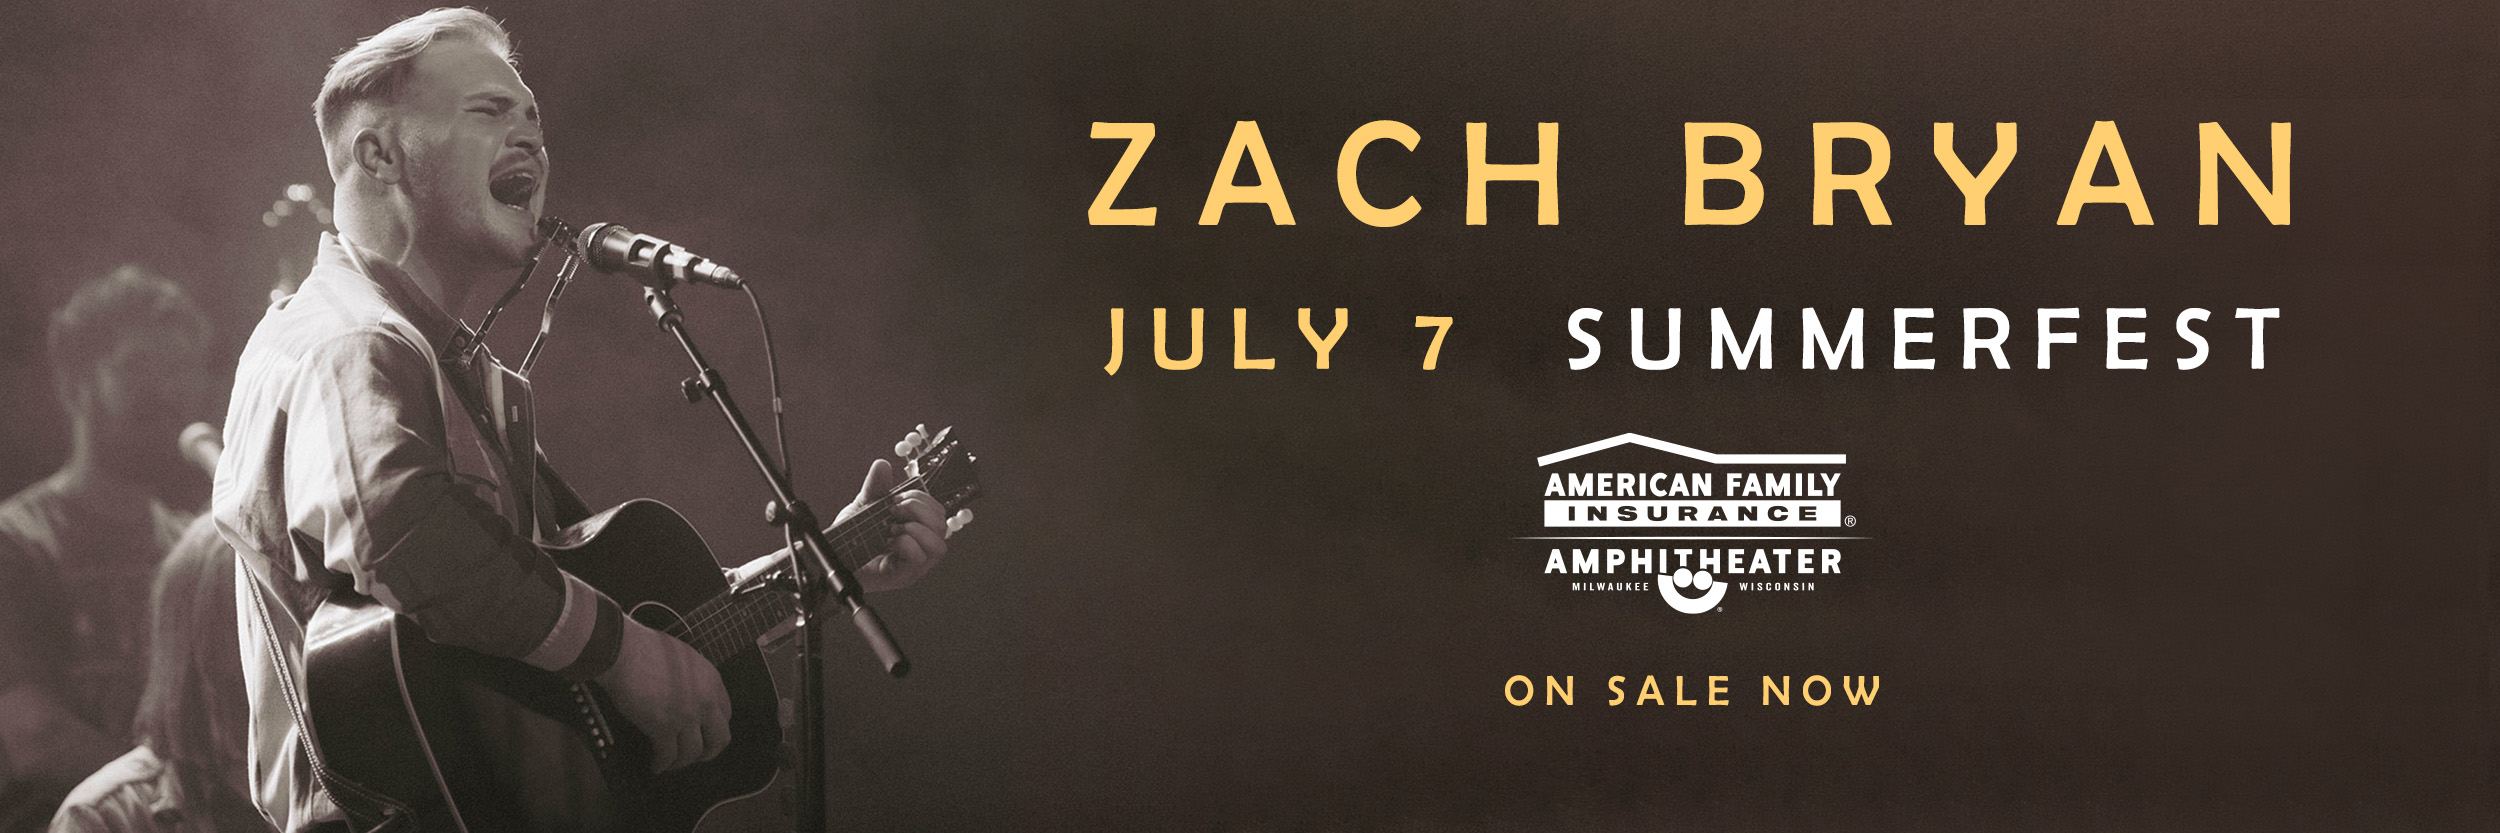 Zach Bryan Headlining Summerfest on July 7 at American Family Insurance Amphitheater 